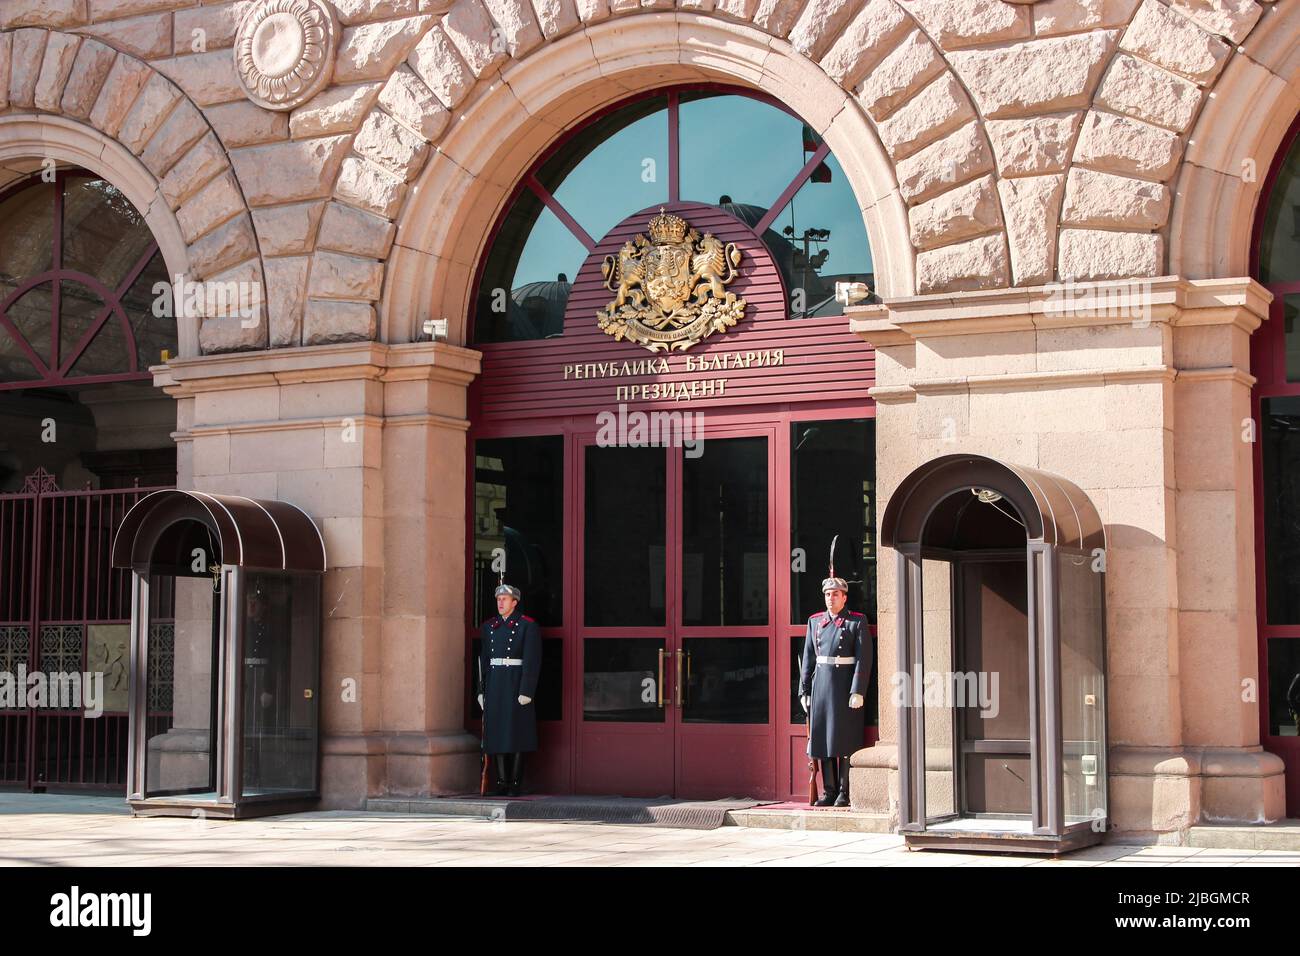 Sofia, Bulgaria - Feb. 14, 2017 : The Presidency building in Sofia, Bulgaria. Entrance is guarded by security men. Translation : Republic of Bulgaria Stock Photo